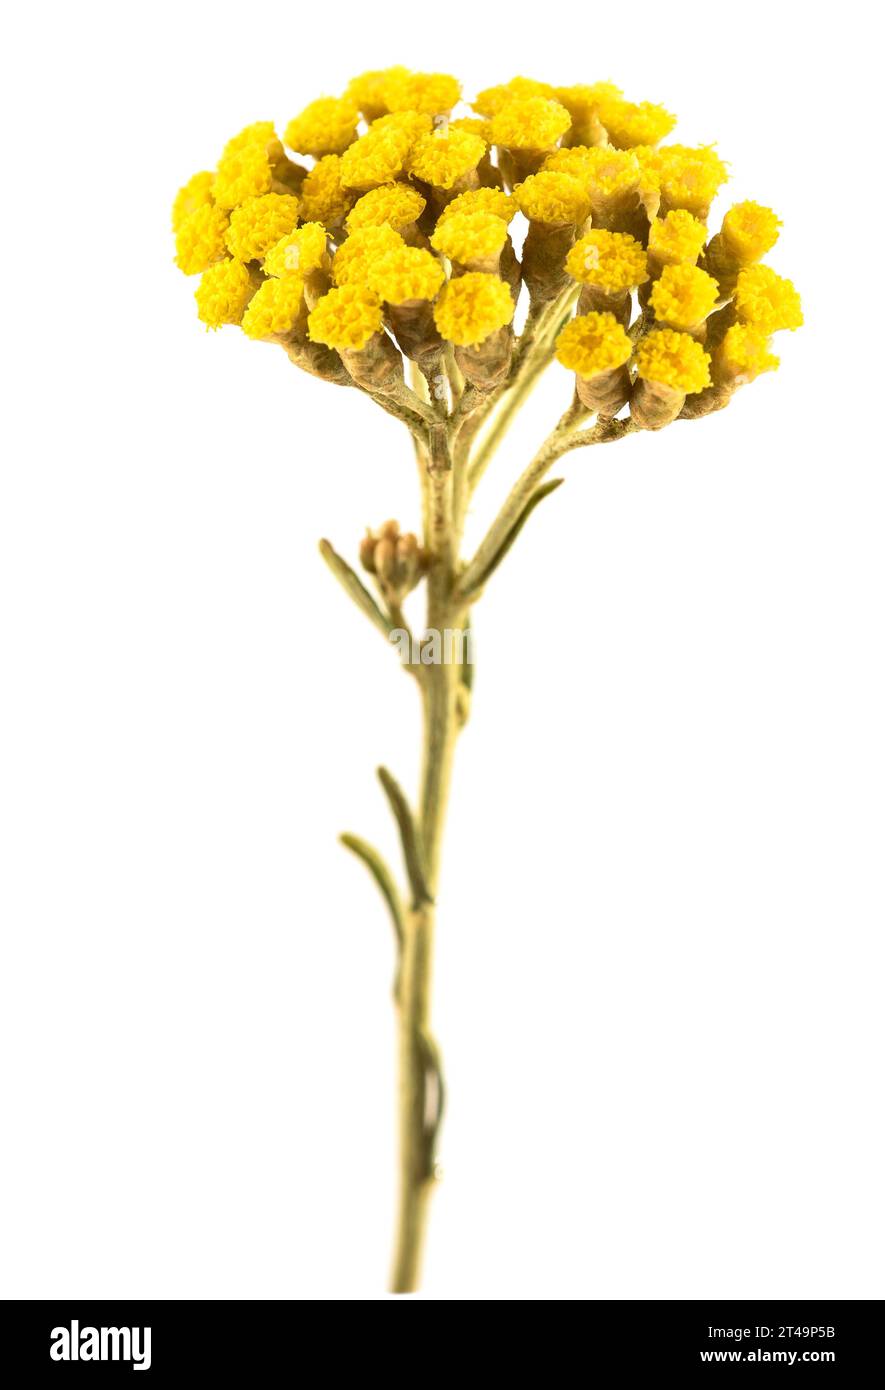 Helichrysum flowers isolated on white background Stock Photo